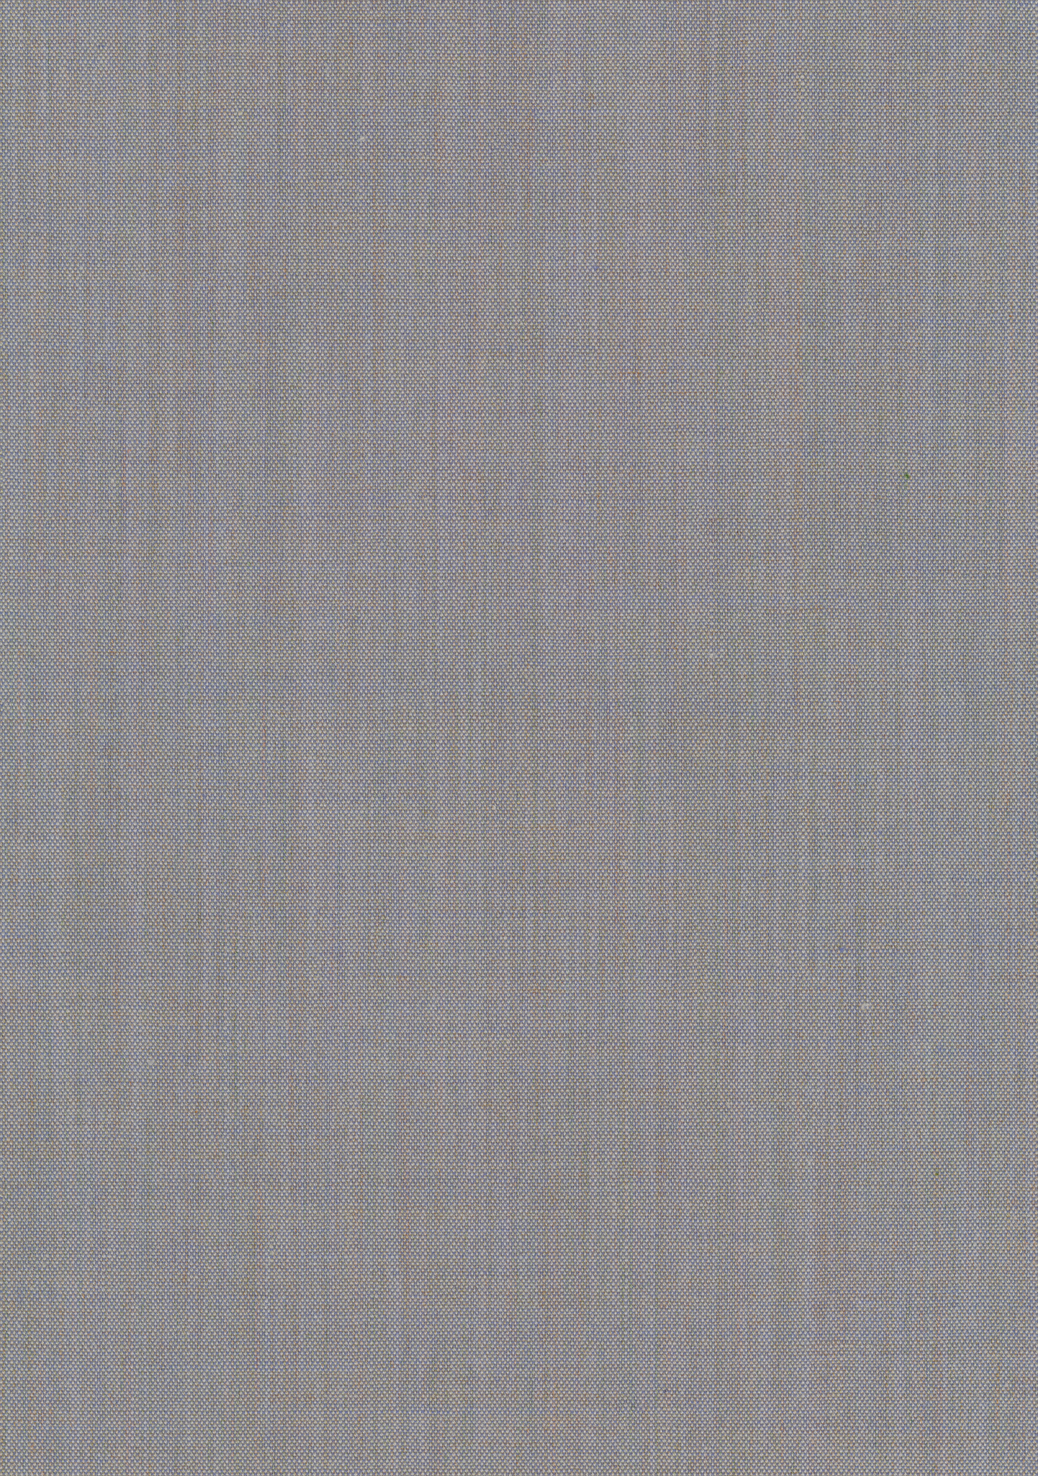 Fabric sample Remix 3 606 grey